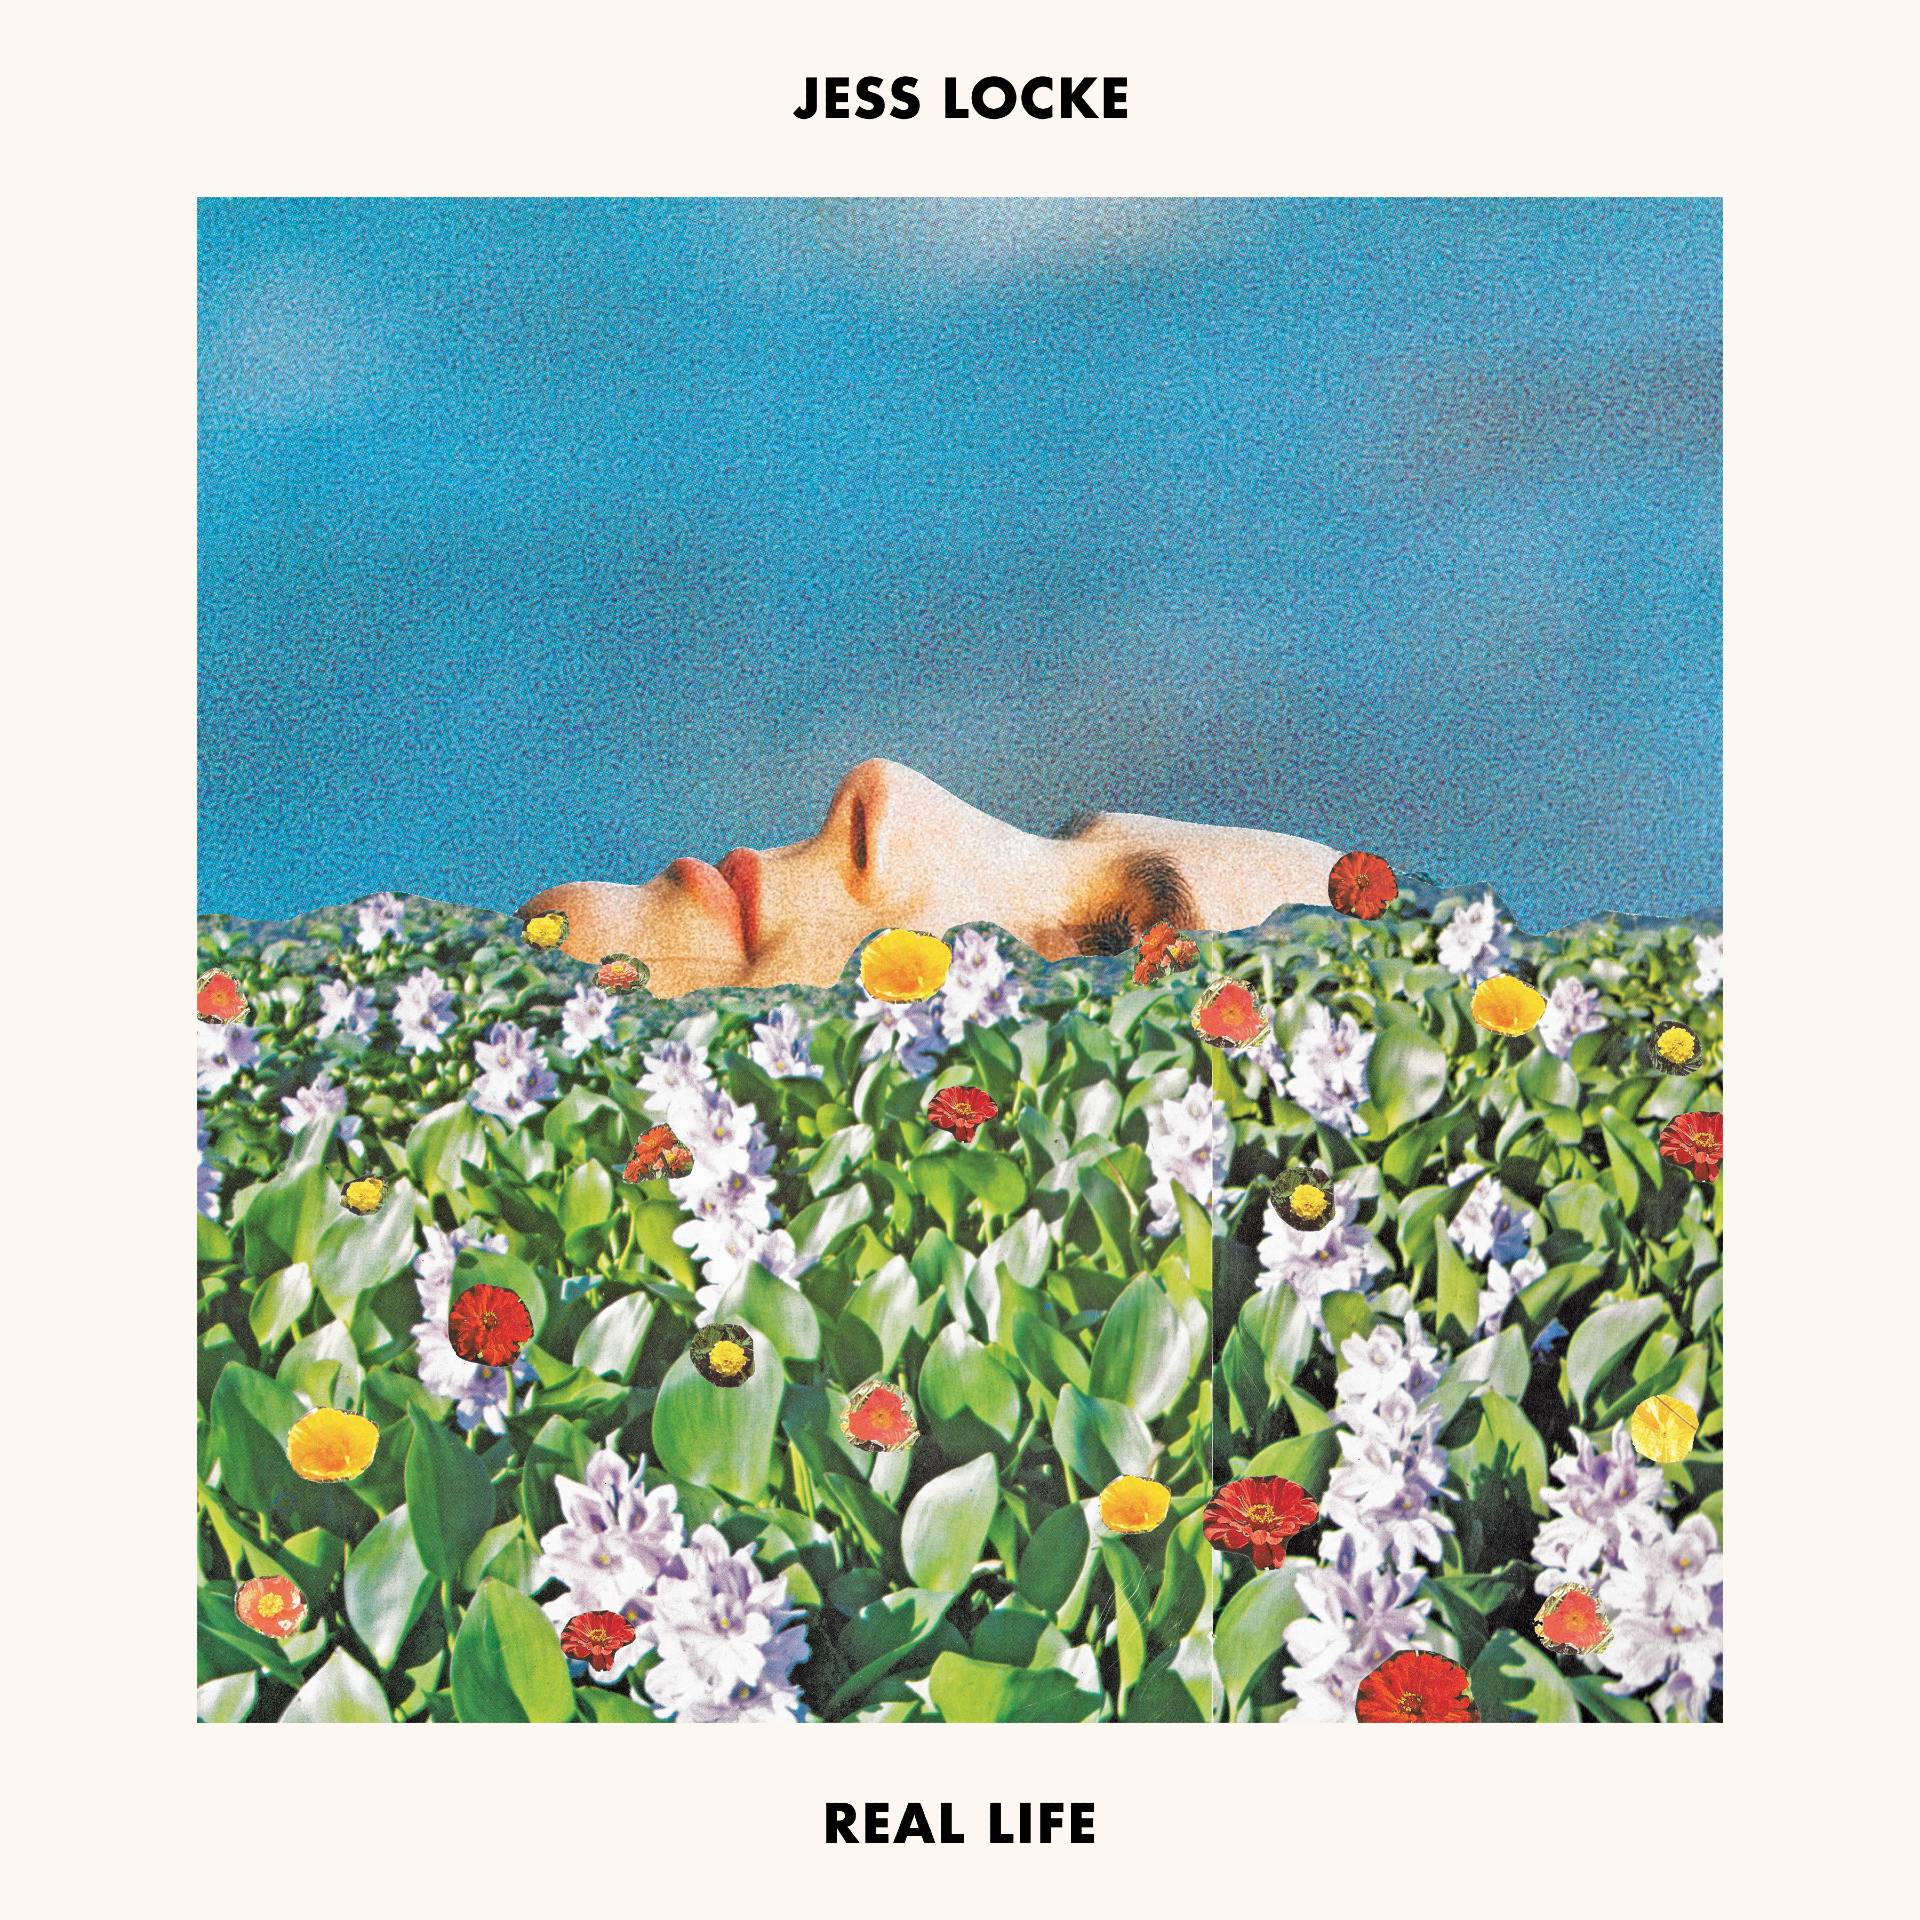 Jess Locke ‘Real Life’ album artwork